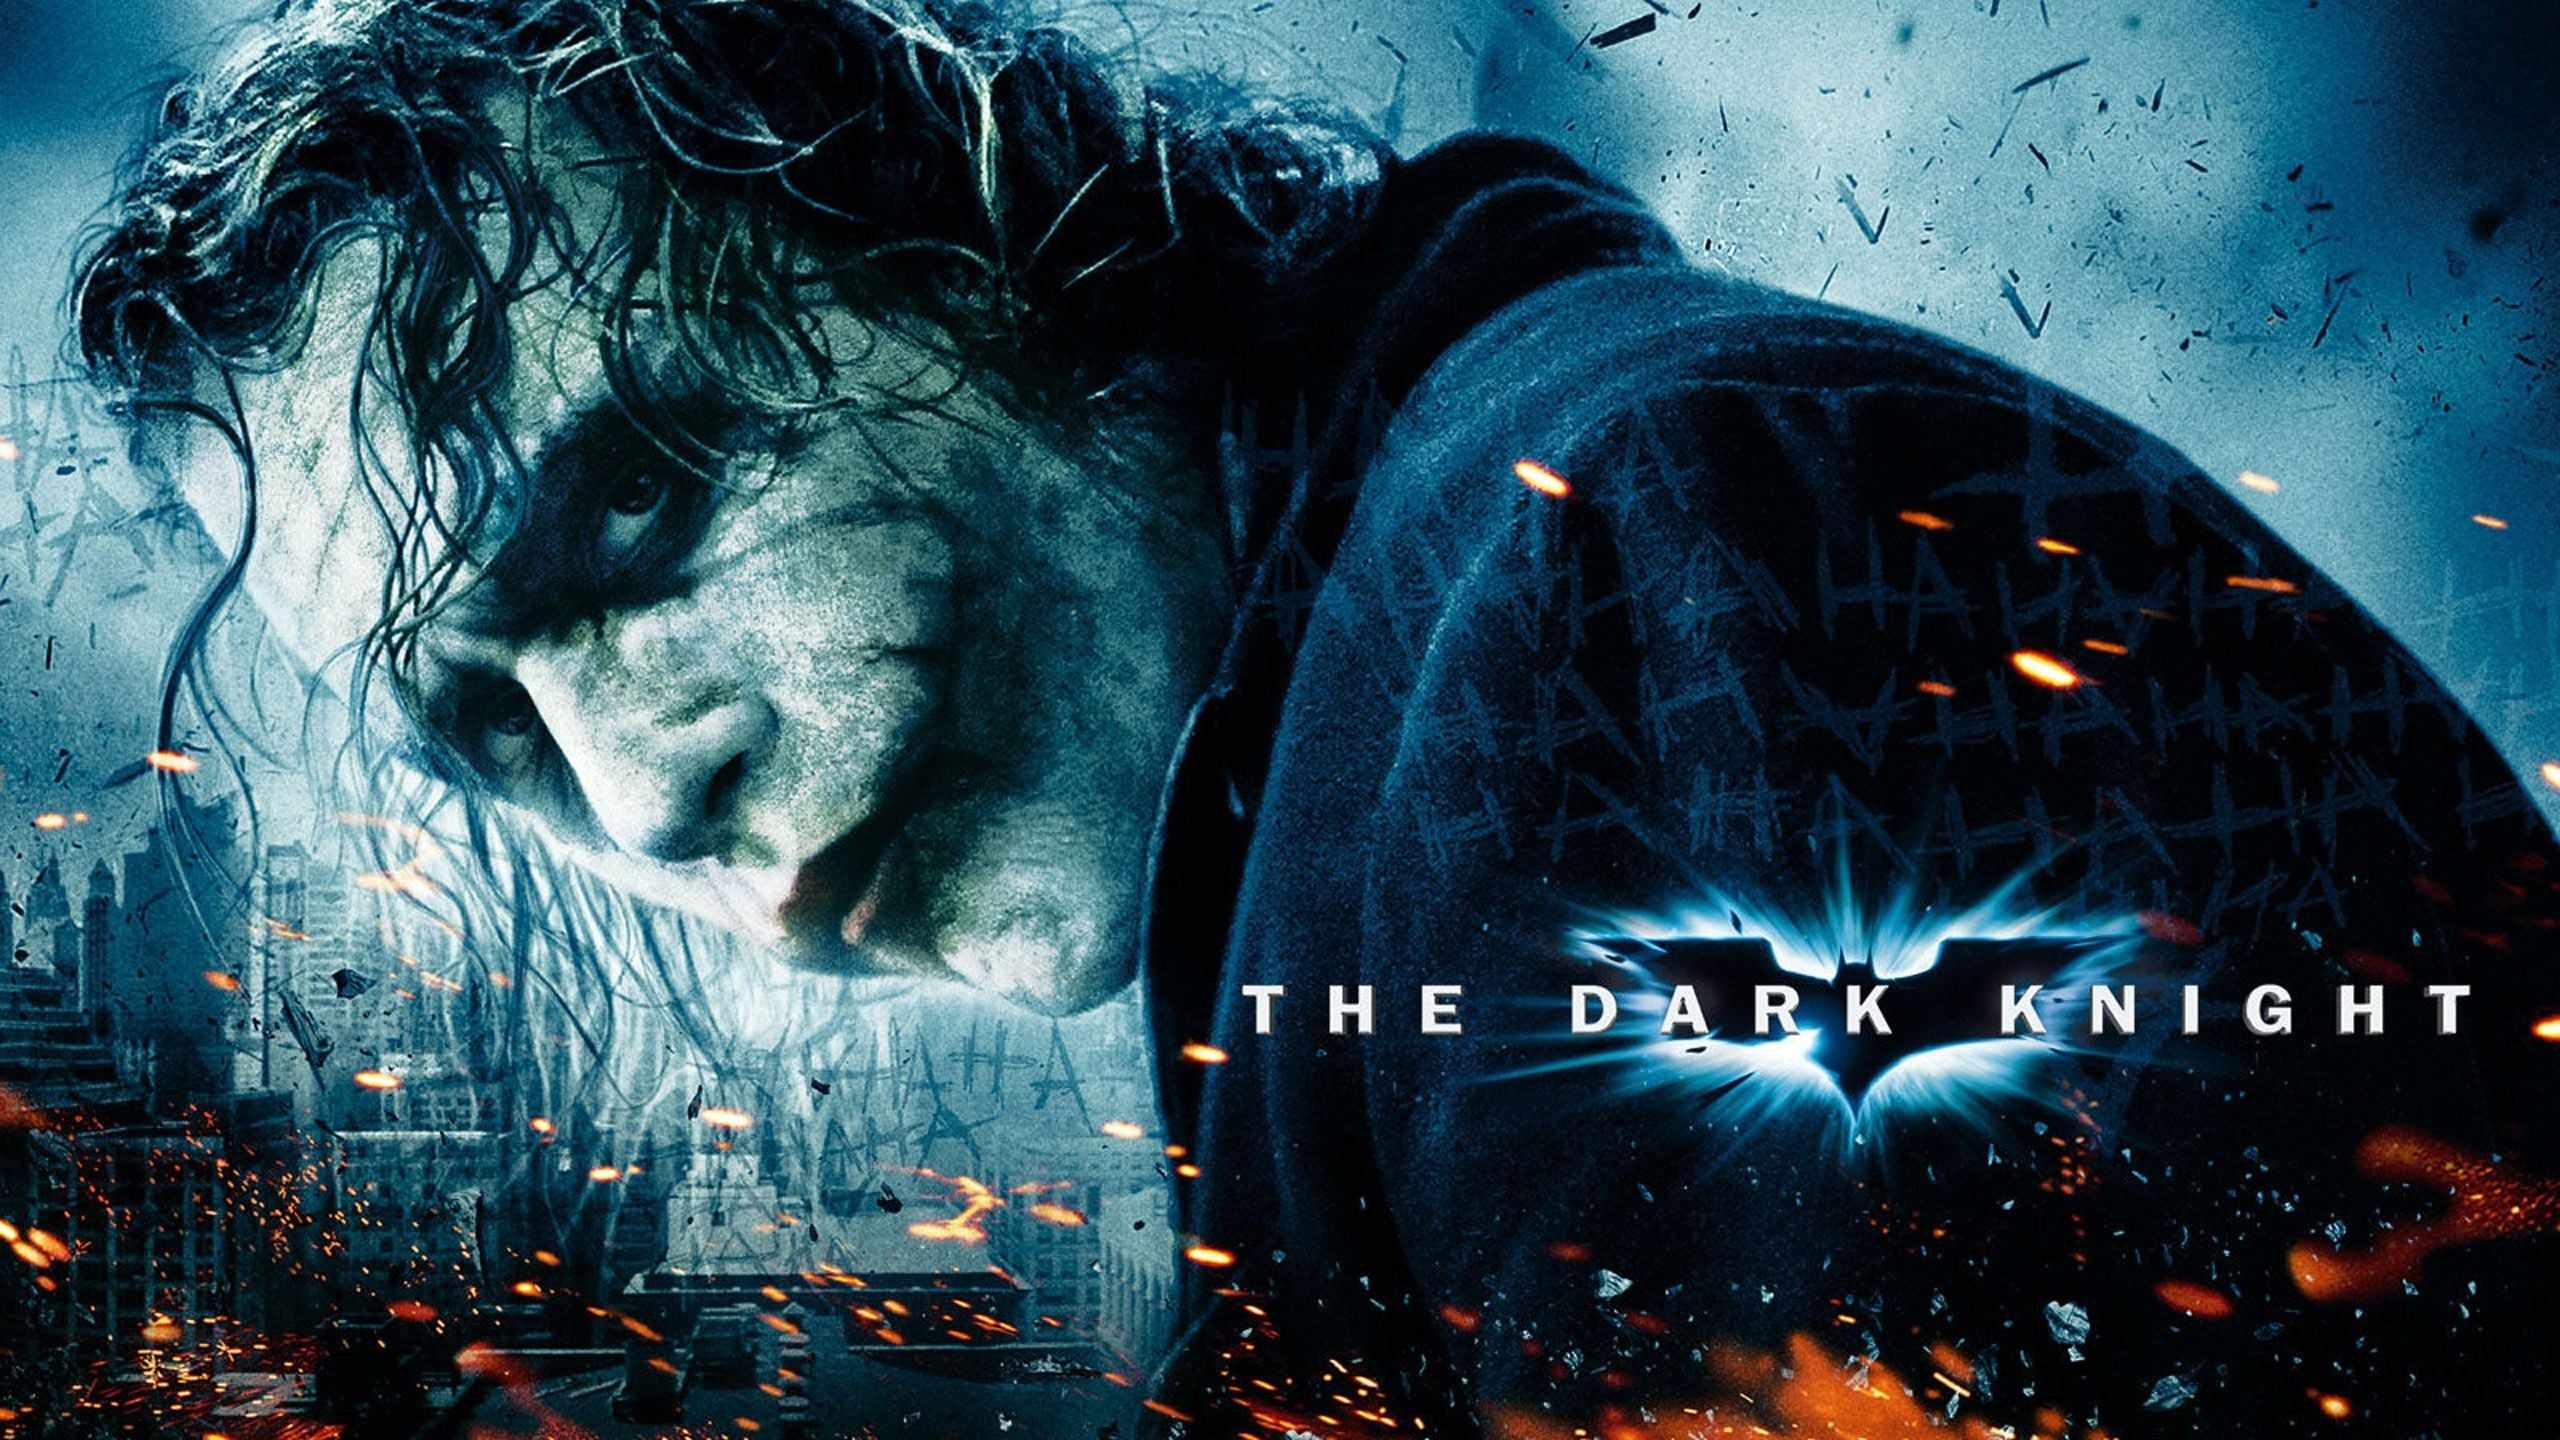 The Dark Knight (Limited Screening)